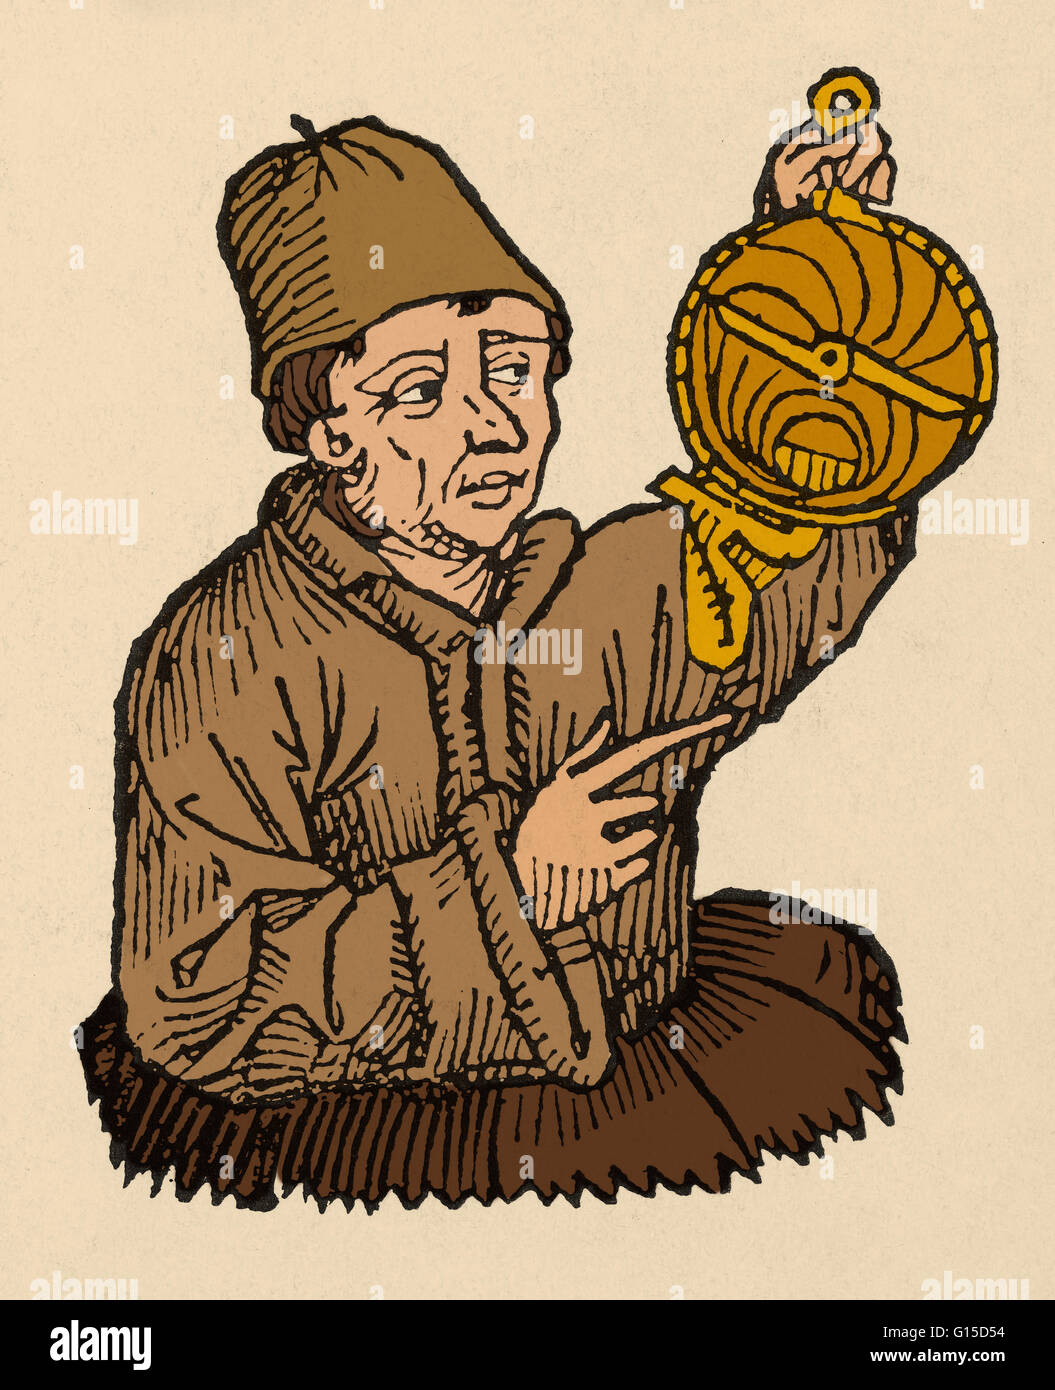 Portrait of Regiomontanus from Liber chronicarum mundi, Nuremberg (1493). Johannes Muller von Konigsberg (June 6, 1436 - July 6 1476) today best known as Regiomontanus, was a German mathematician, astronomer, astrologer, translator, instrument maker and C Stock Photo